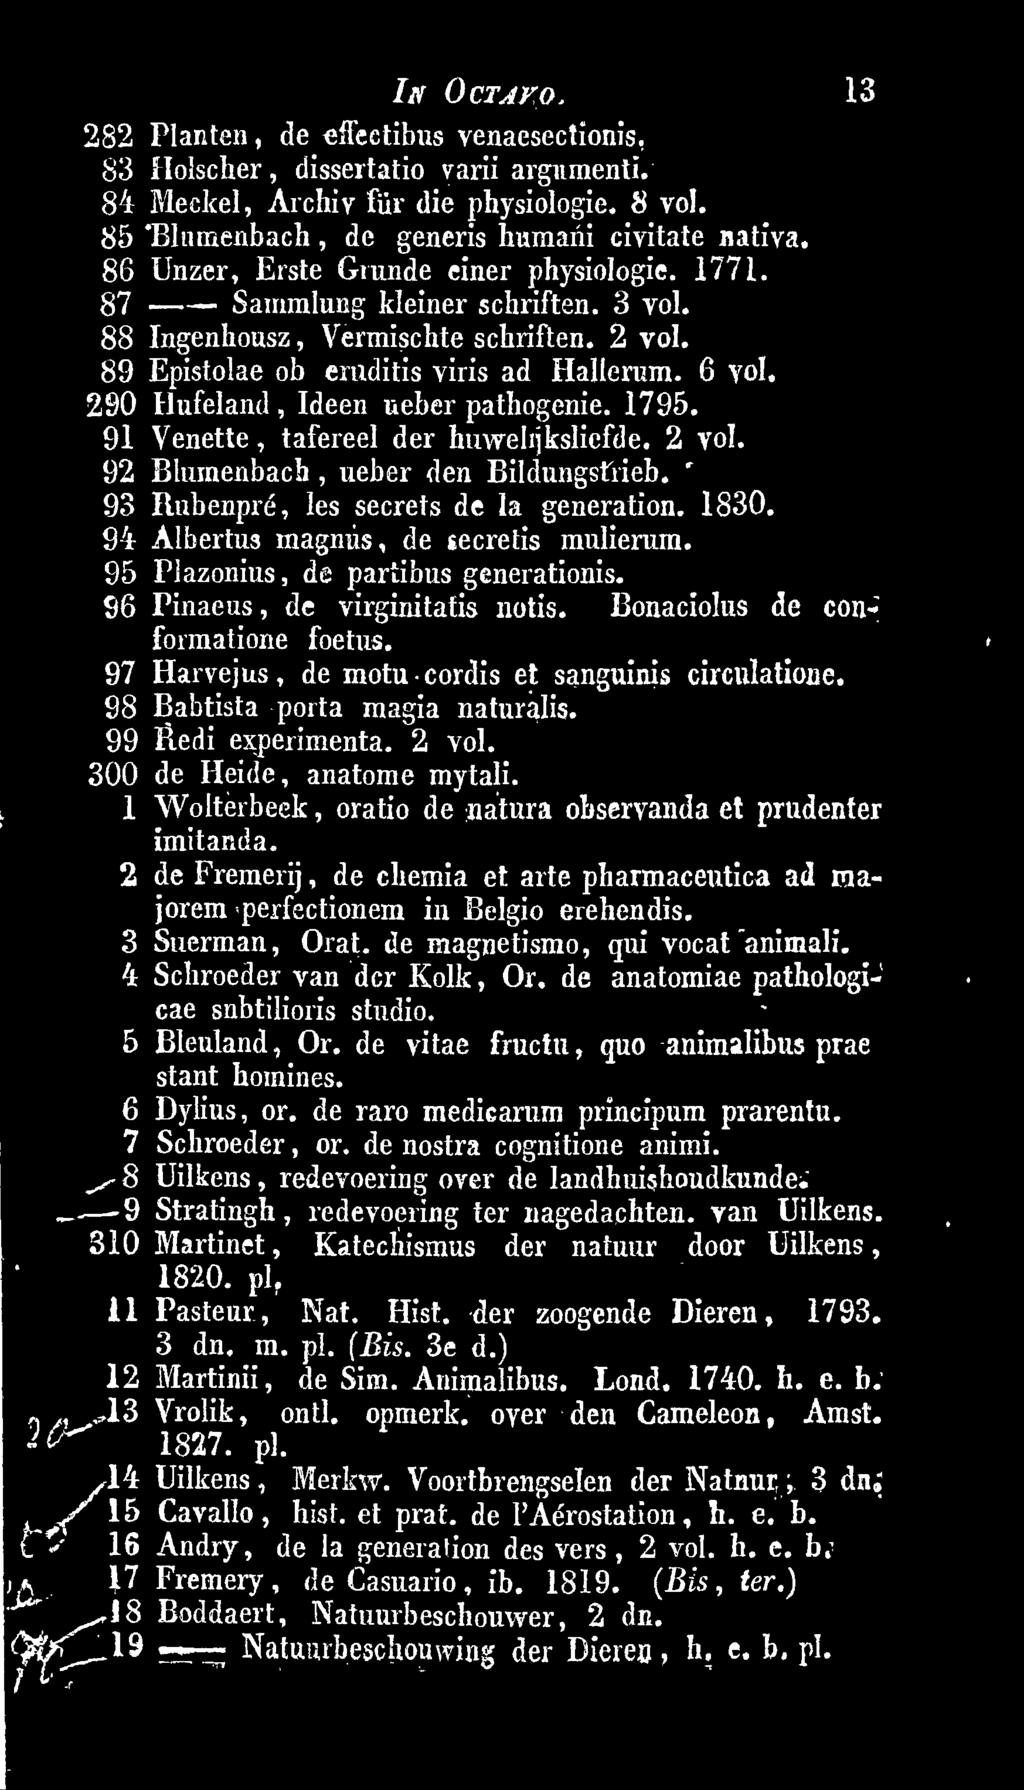 97 Harvejus, de motu cordis et sanguinis circulatione. 98 Babtista porta magia naturalis. 99 &edi experimenta. 2 vol. 300 de Heide, anatome mytali.